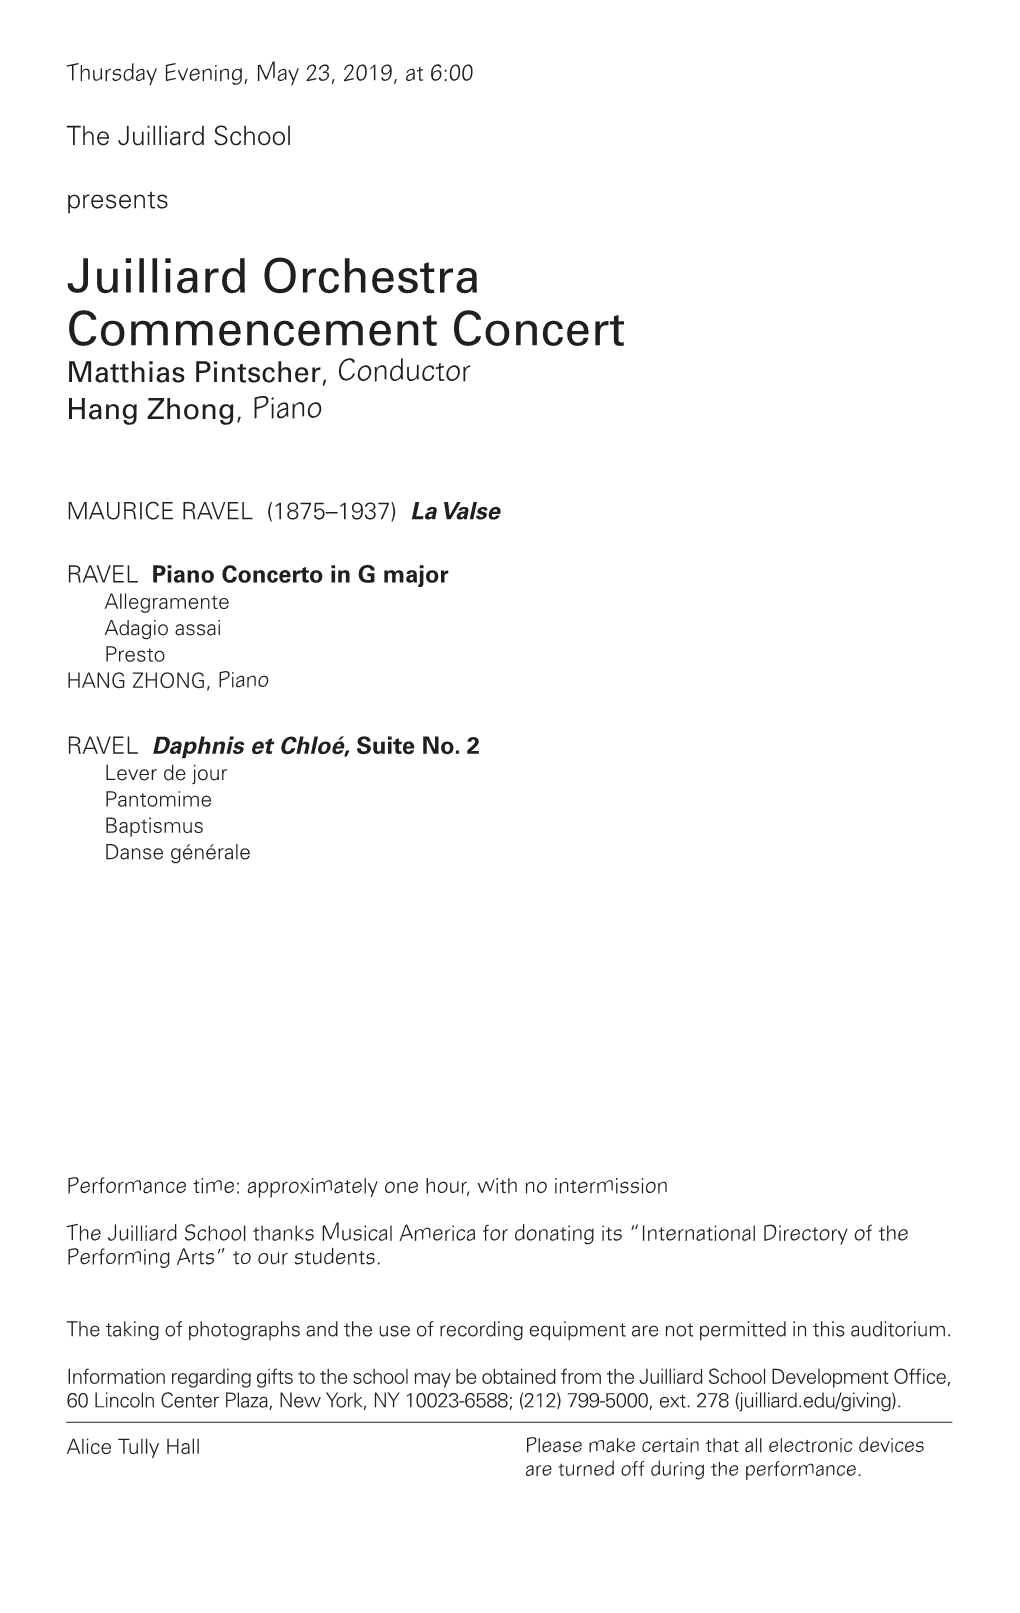 Juilliard Orchestra Commencement Concert Matthias Pintscher, Conductor Hang Zhong, Piano